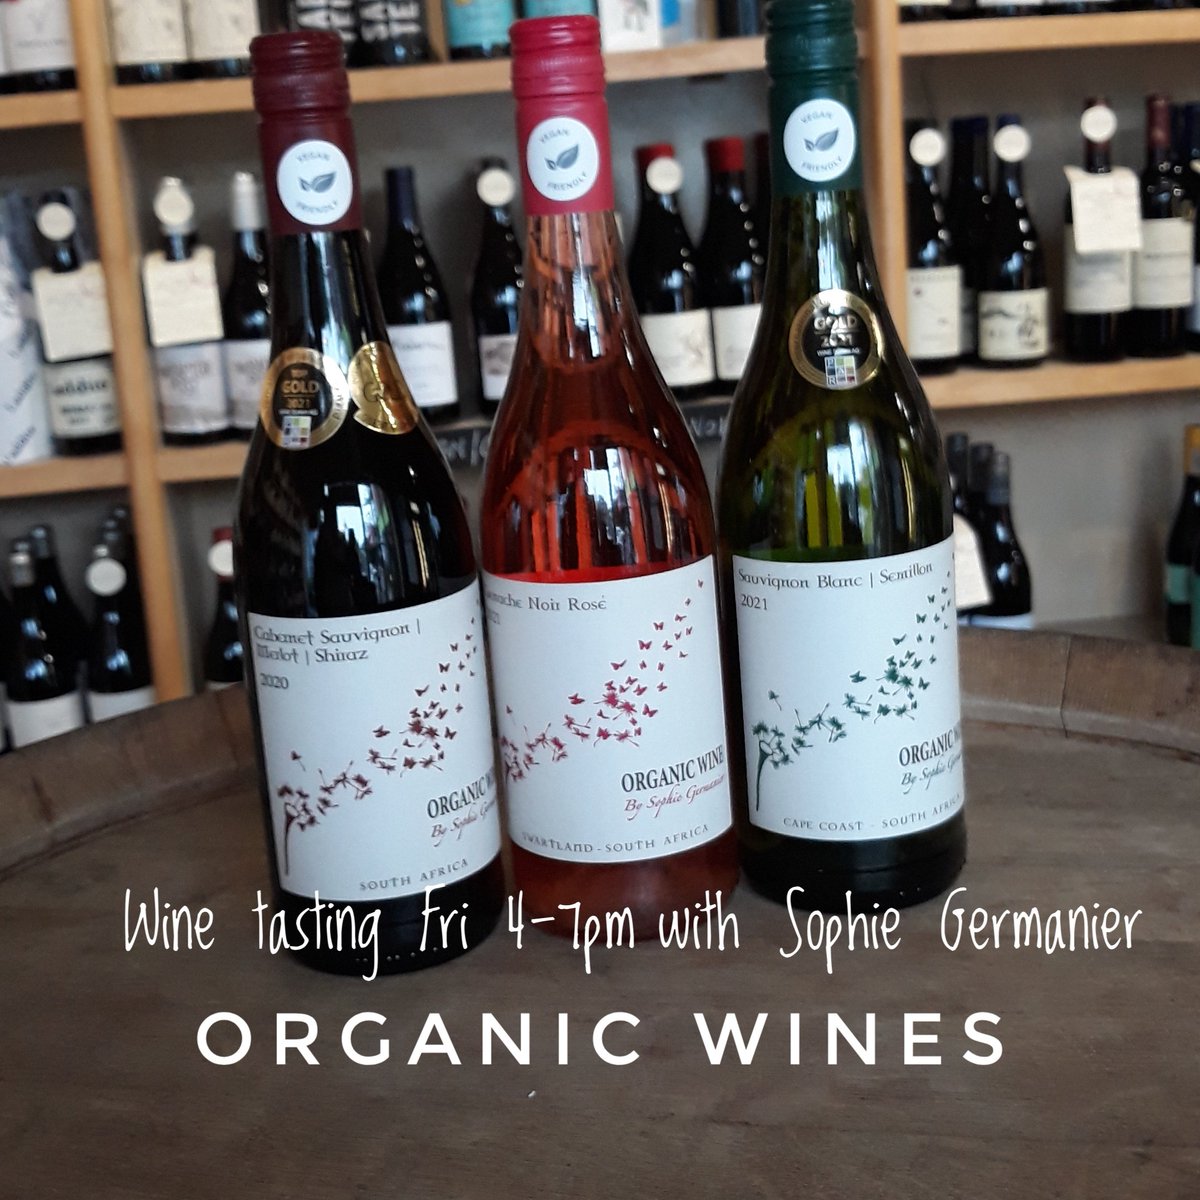 #winetasting Friday

#organicwine #sophiegermanier #vinopronto #capewines #vinoprontofinewines